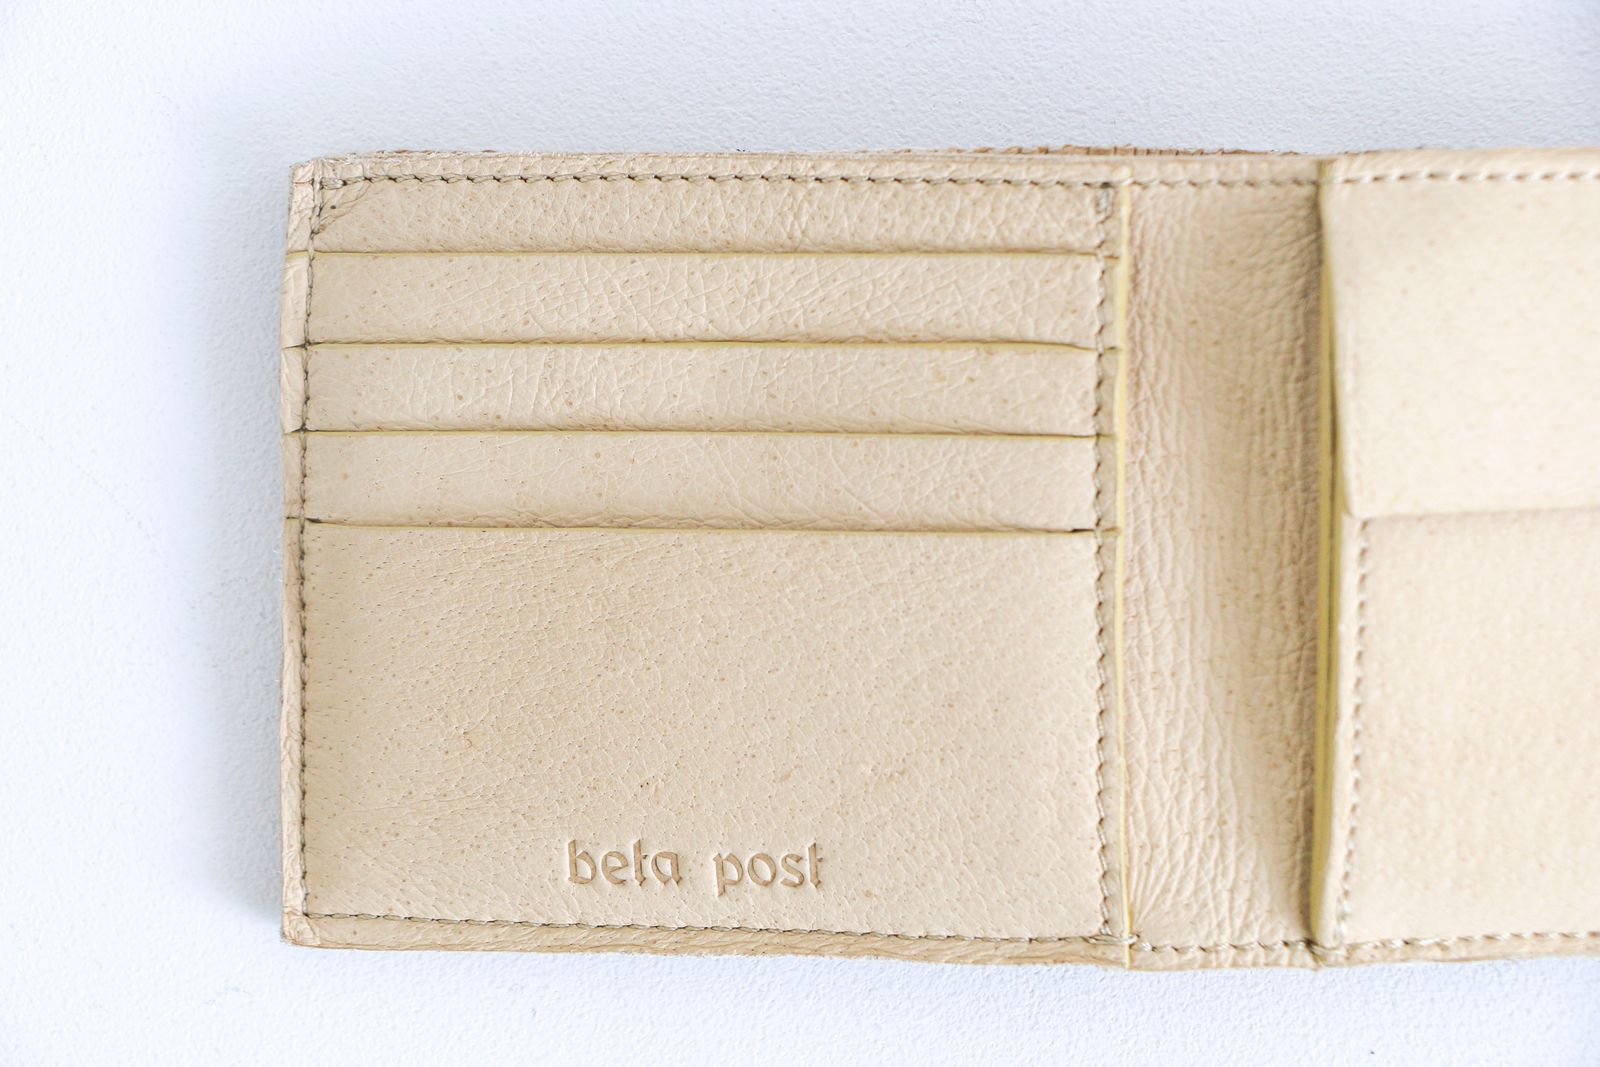 Cardboard Leather Half Wallet / ハーフウォレット / 財布 / タイベック - フリーサイズ